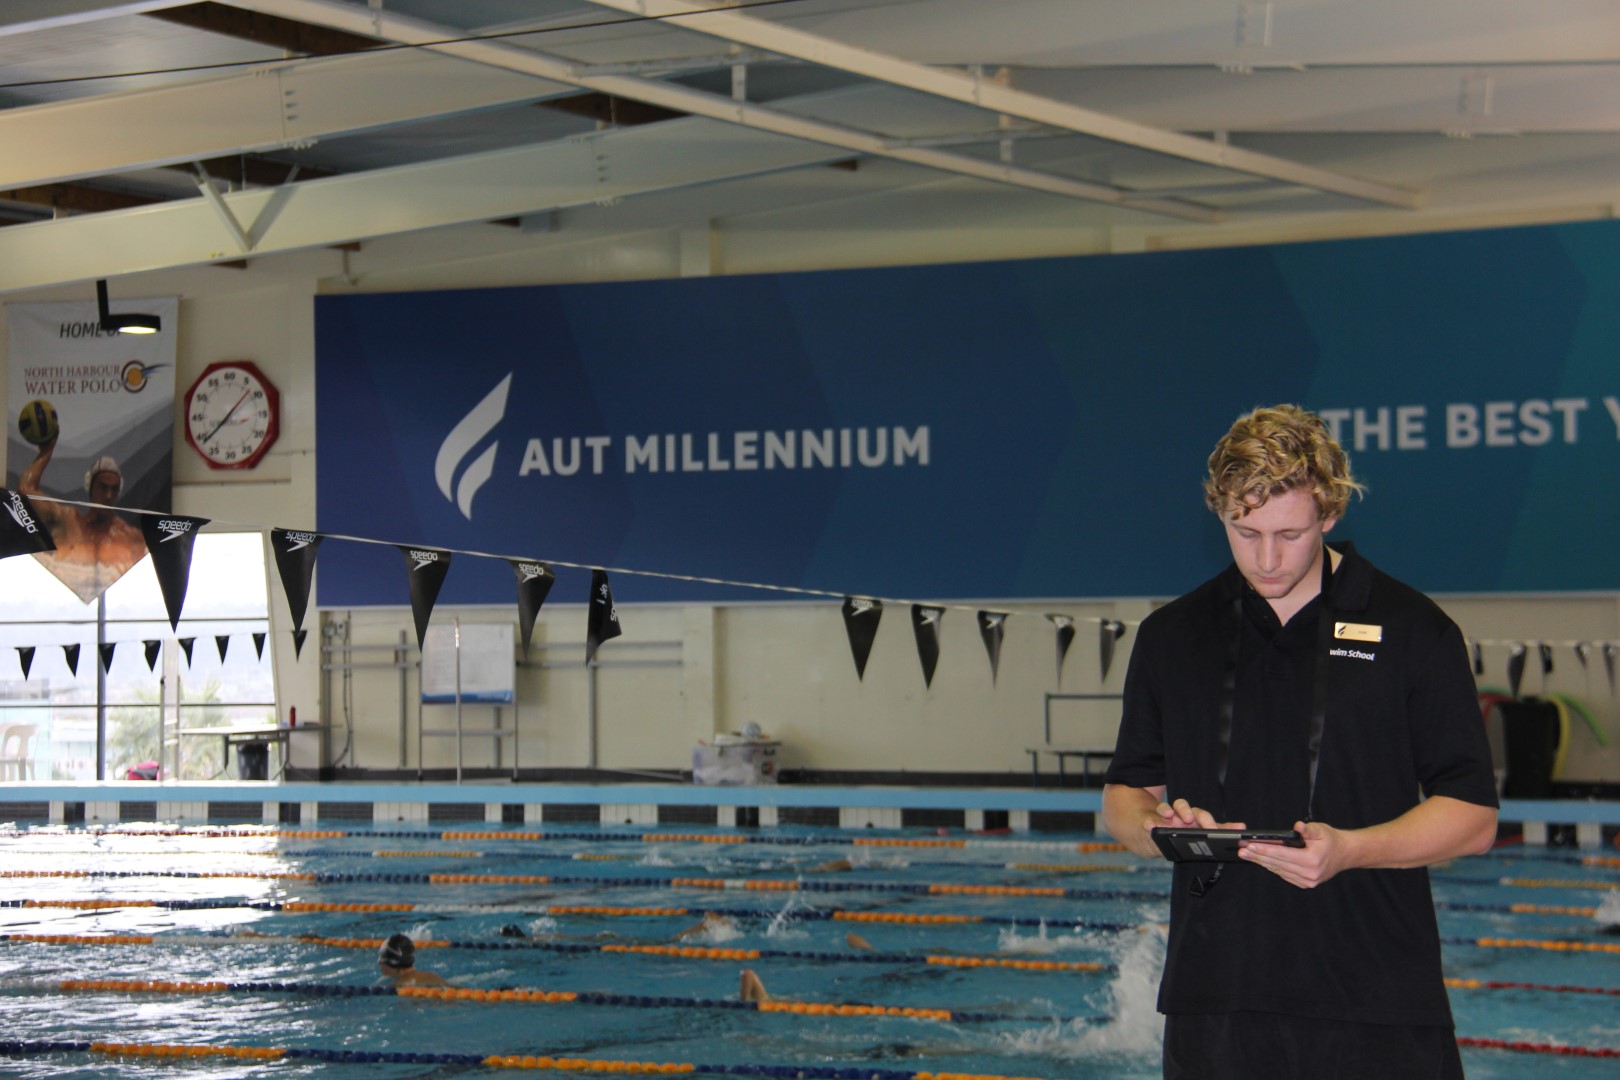 Swim School App 1 Aut Millennium News